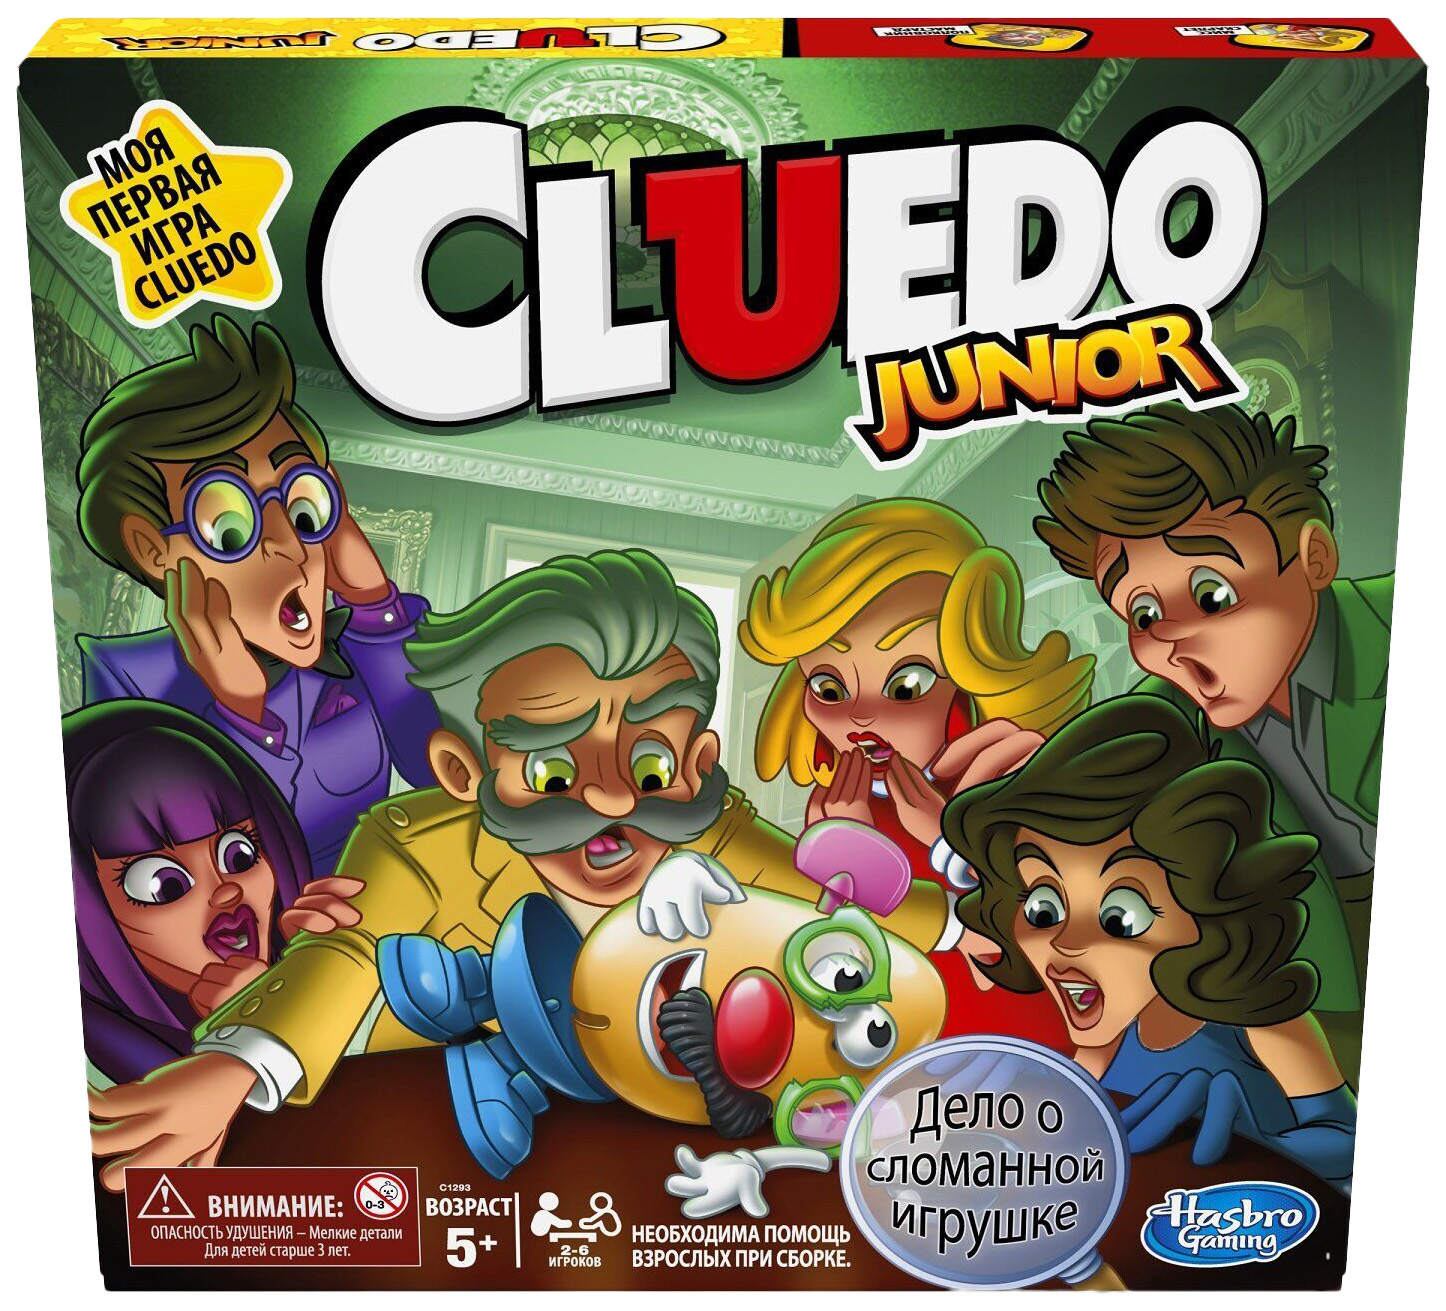 Игра настольная Hasbro Клуэдо джуниор C1293E76 игра настольная hasbro games игра в жизнь джуниор e6678121